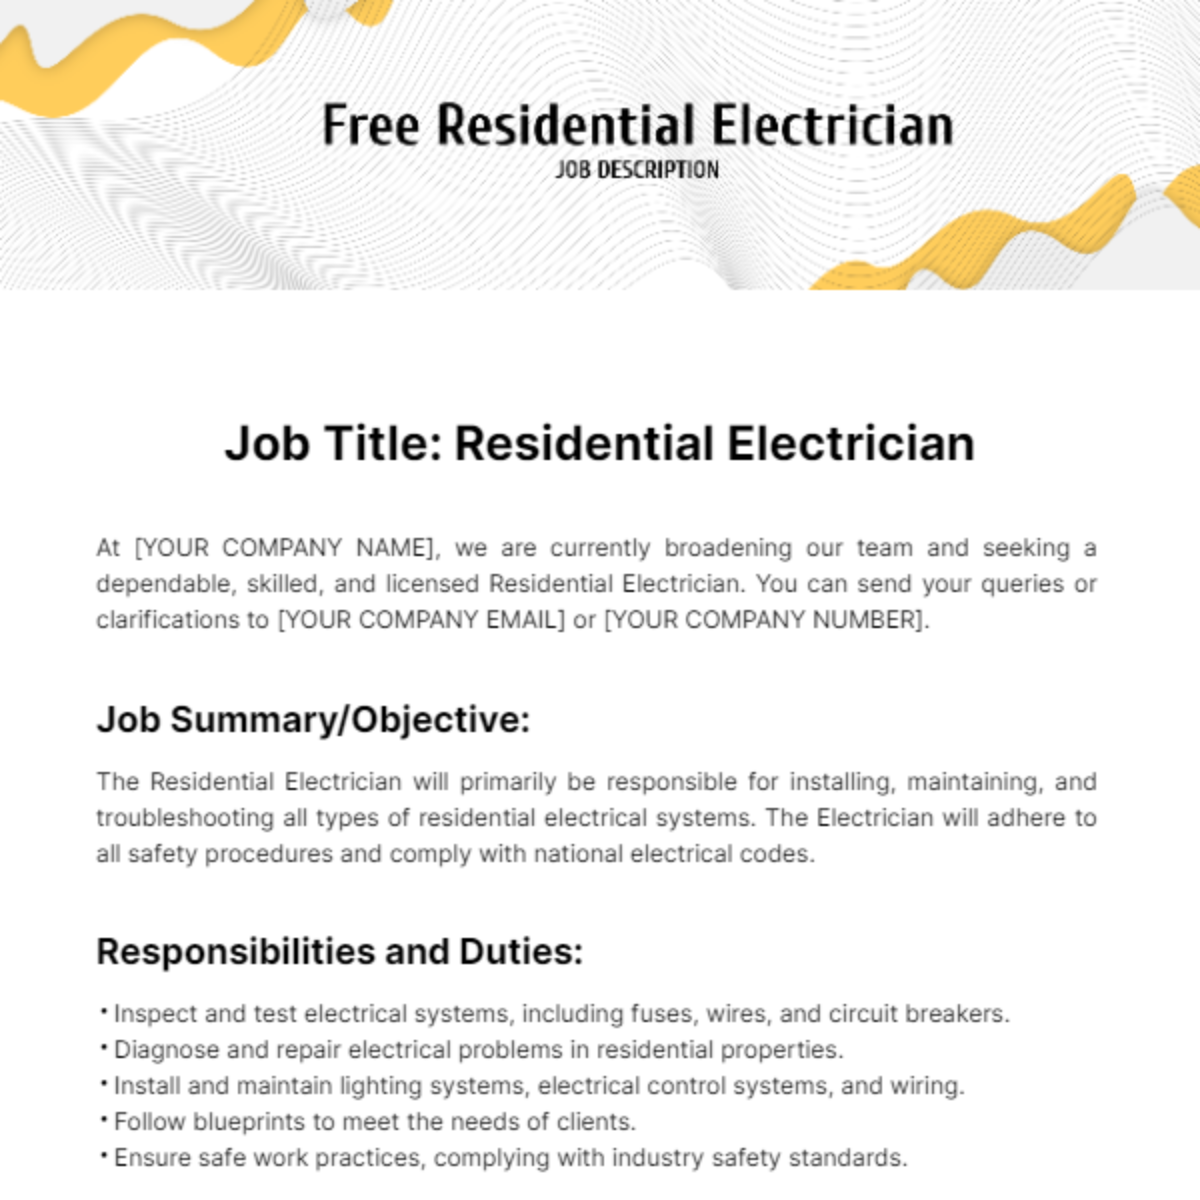 Free Residential Electrician Job Description Template